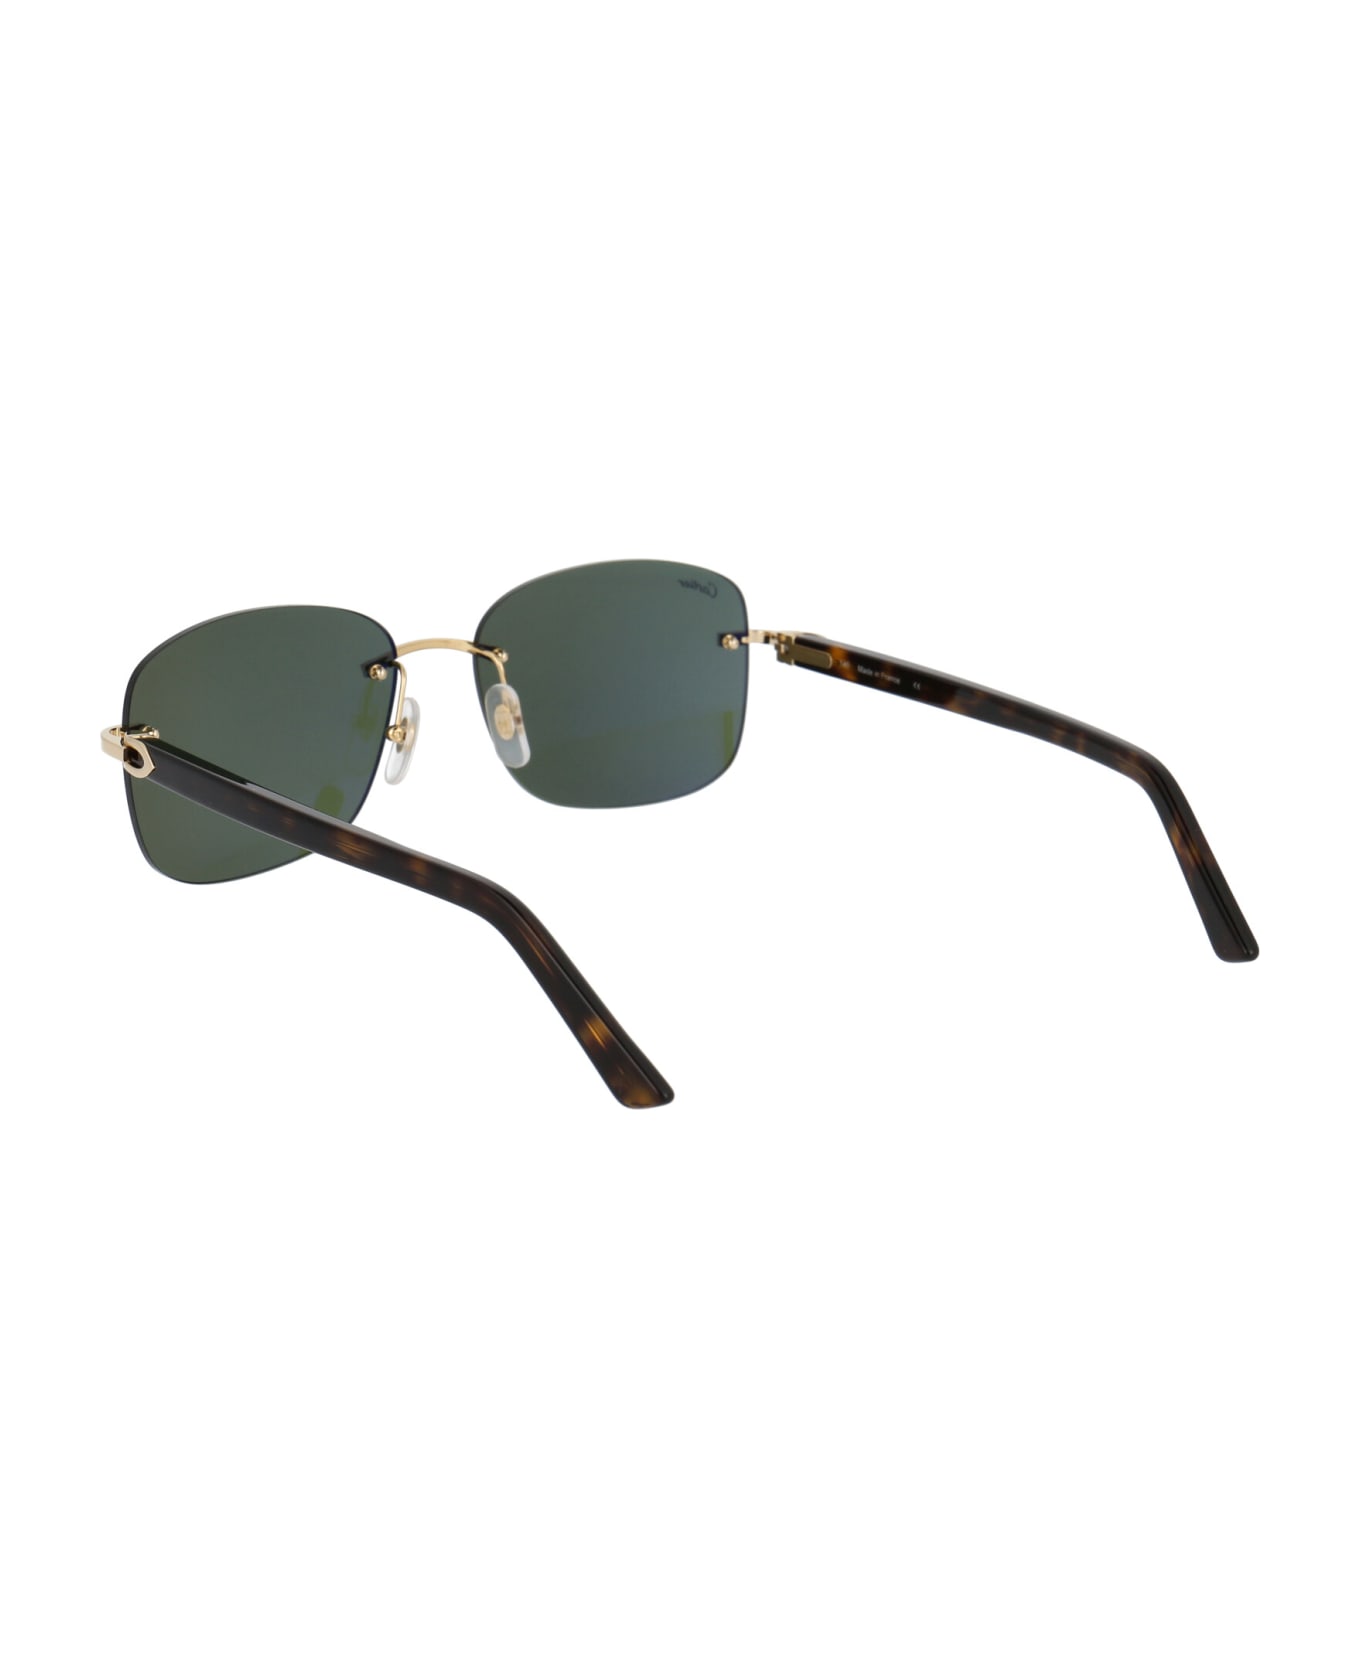 Cartier Eyewear Ct0227s Sunglasses - 002 GOLD HAVANA GREEN サングラス